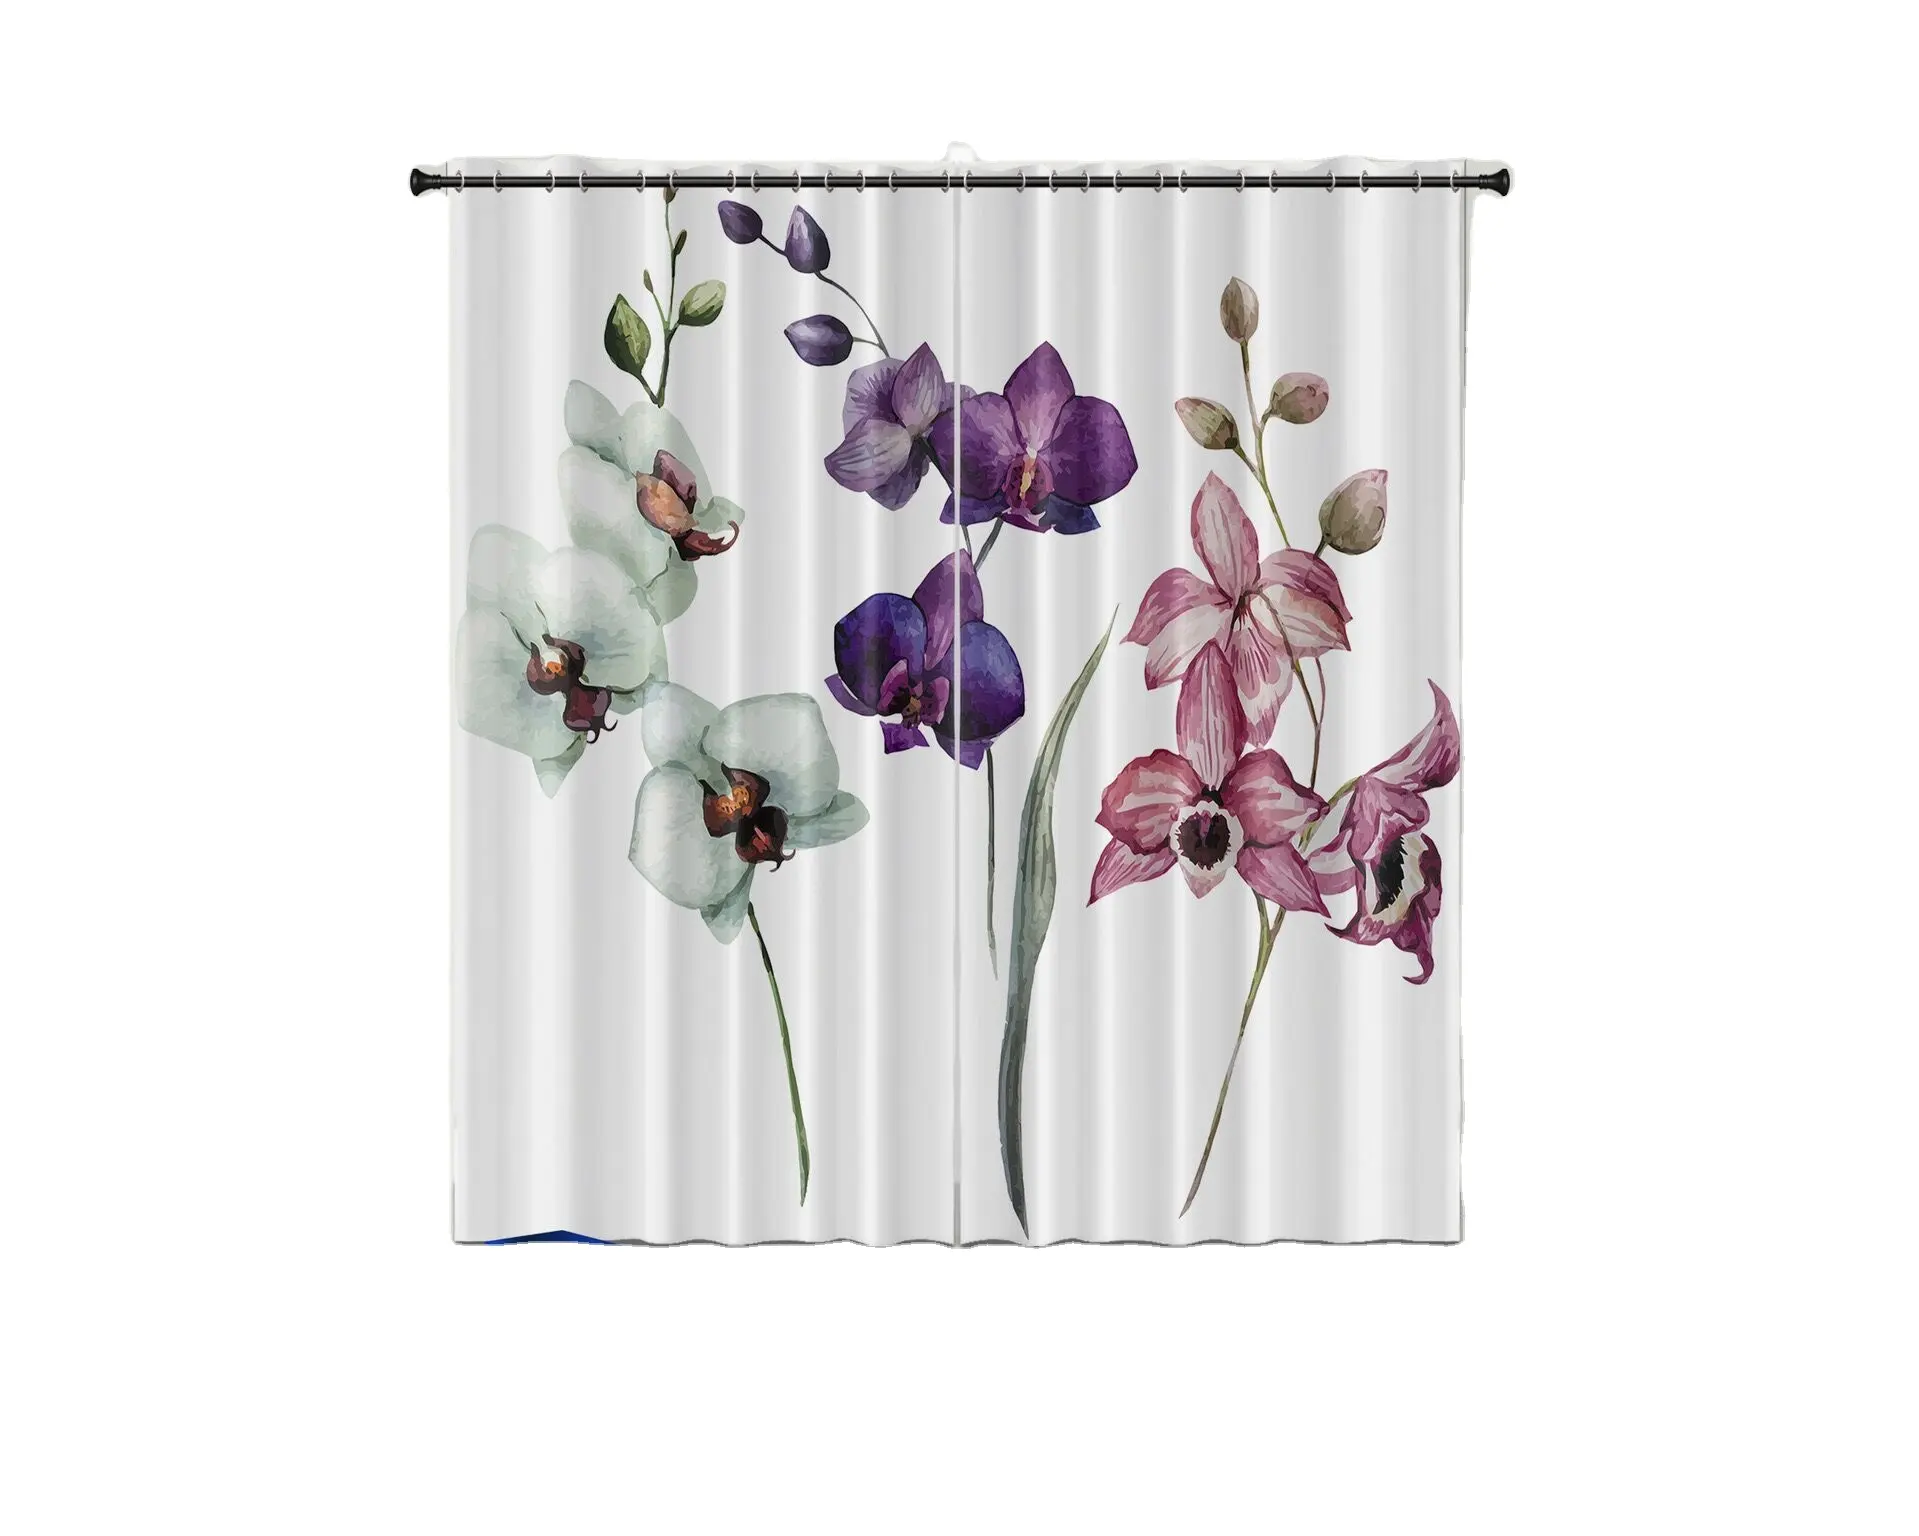 Wholesale Luxury European style digital print custom design window curtains floral printed living room blackout curtains